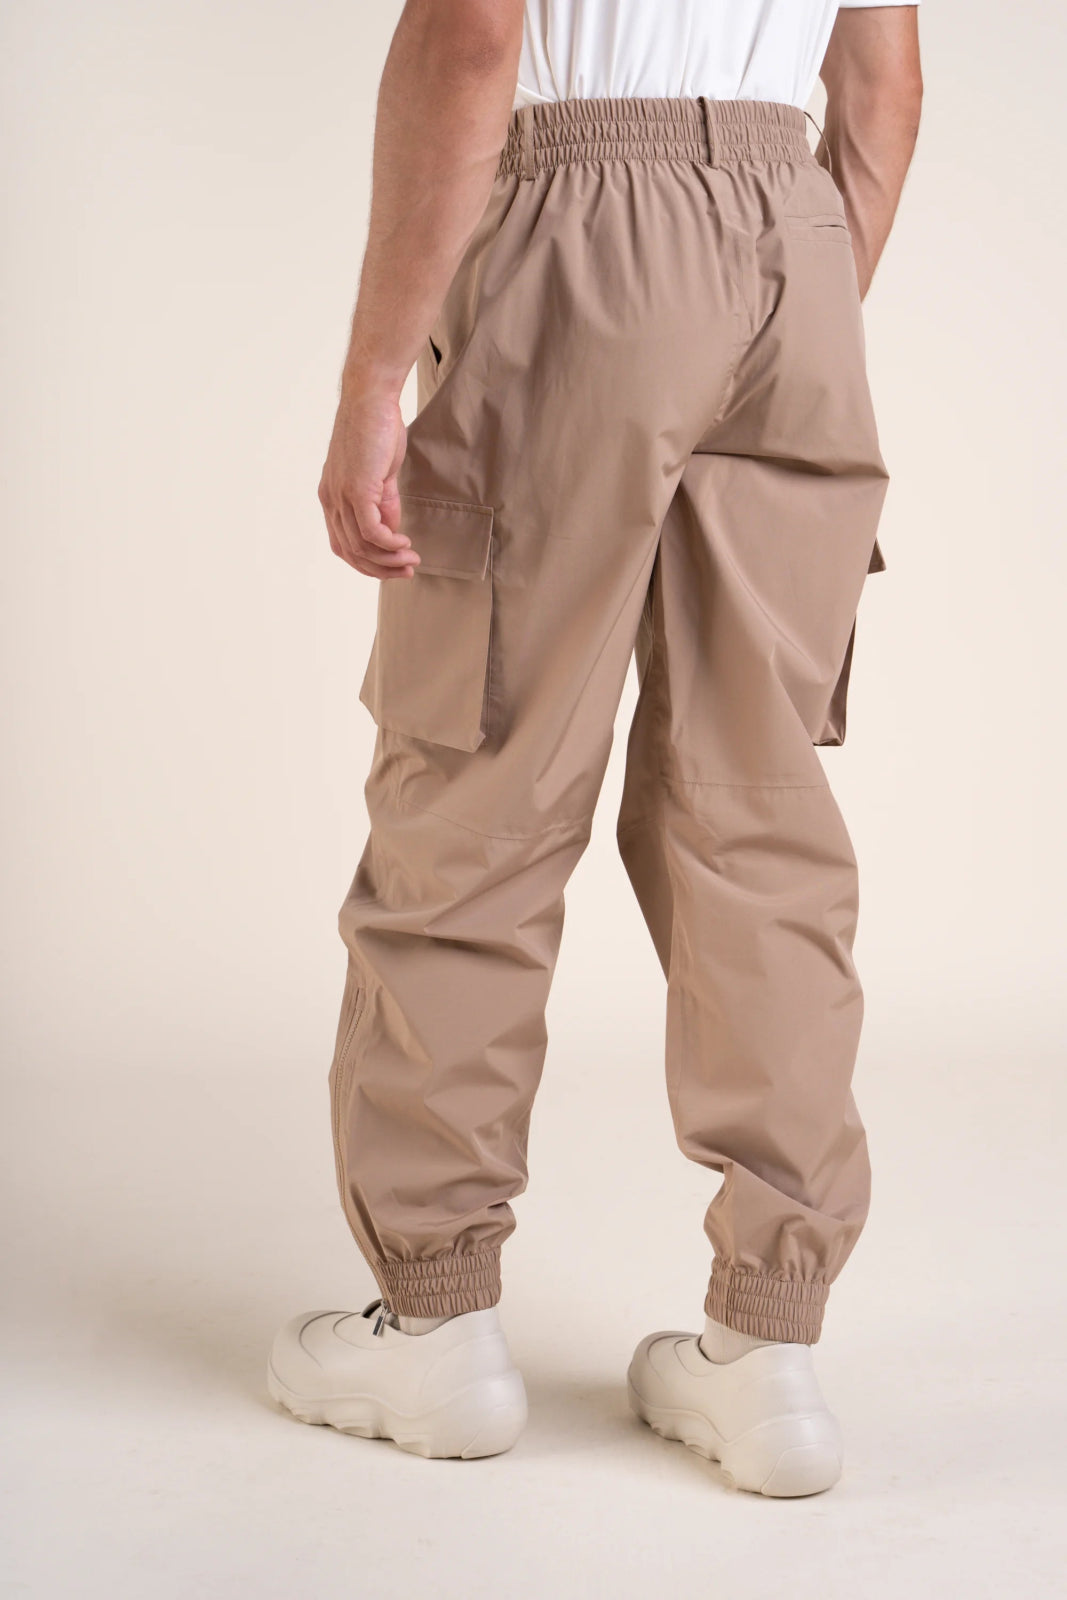 Gambetta multi-pocket waterproof cargo pants #couleur_sahara